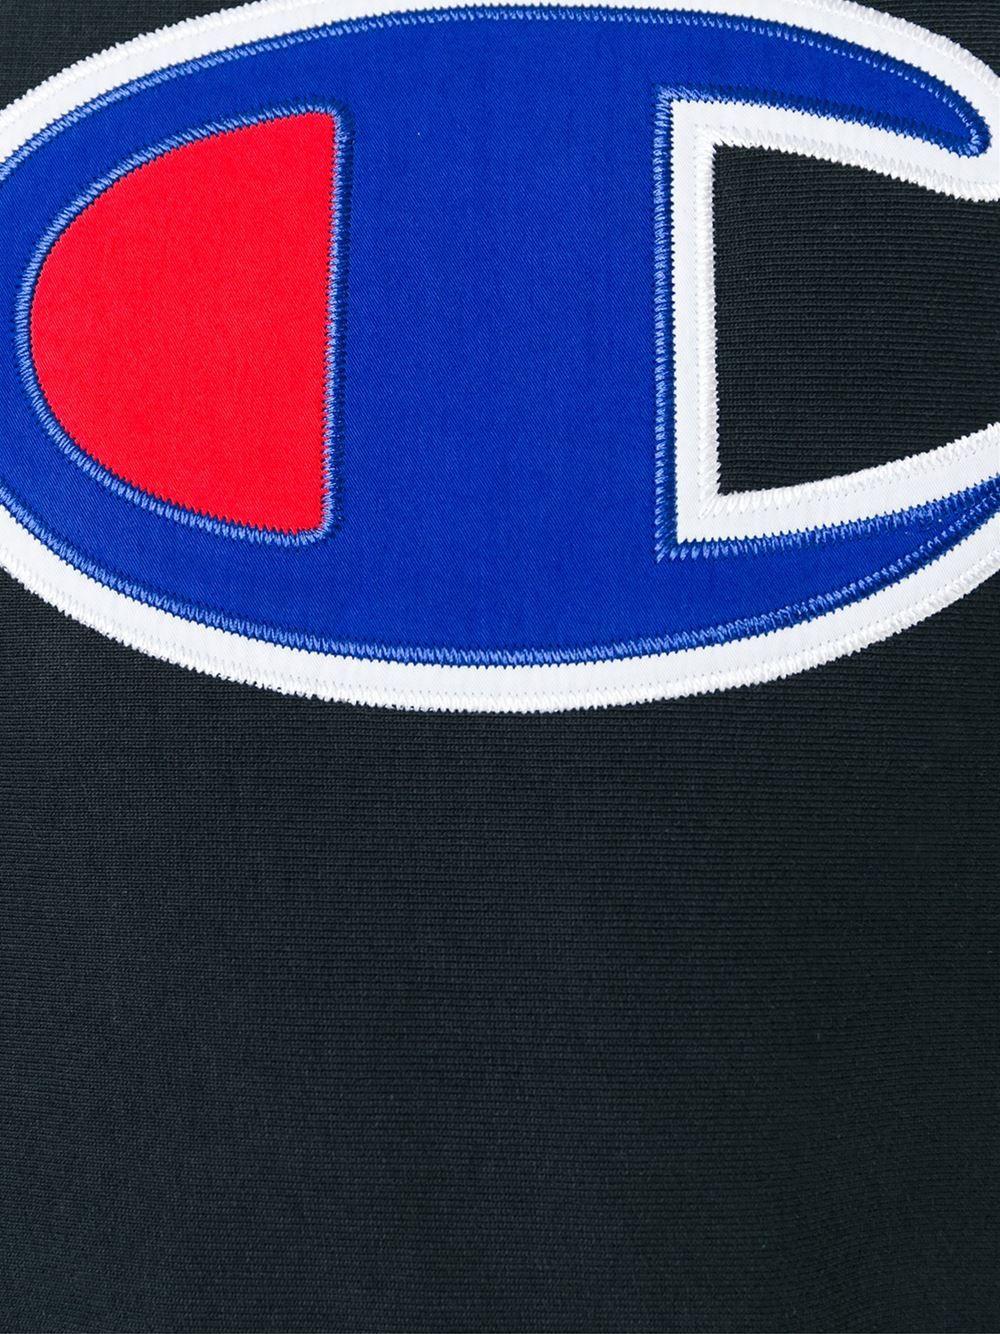 Champion Clothing Logo - Lyst Logo Patch Sweatshirt in Black